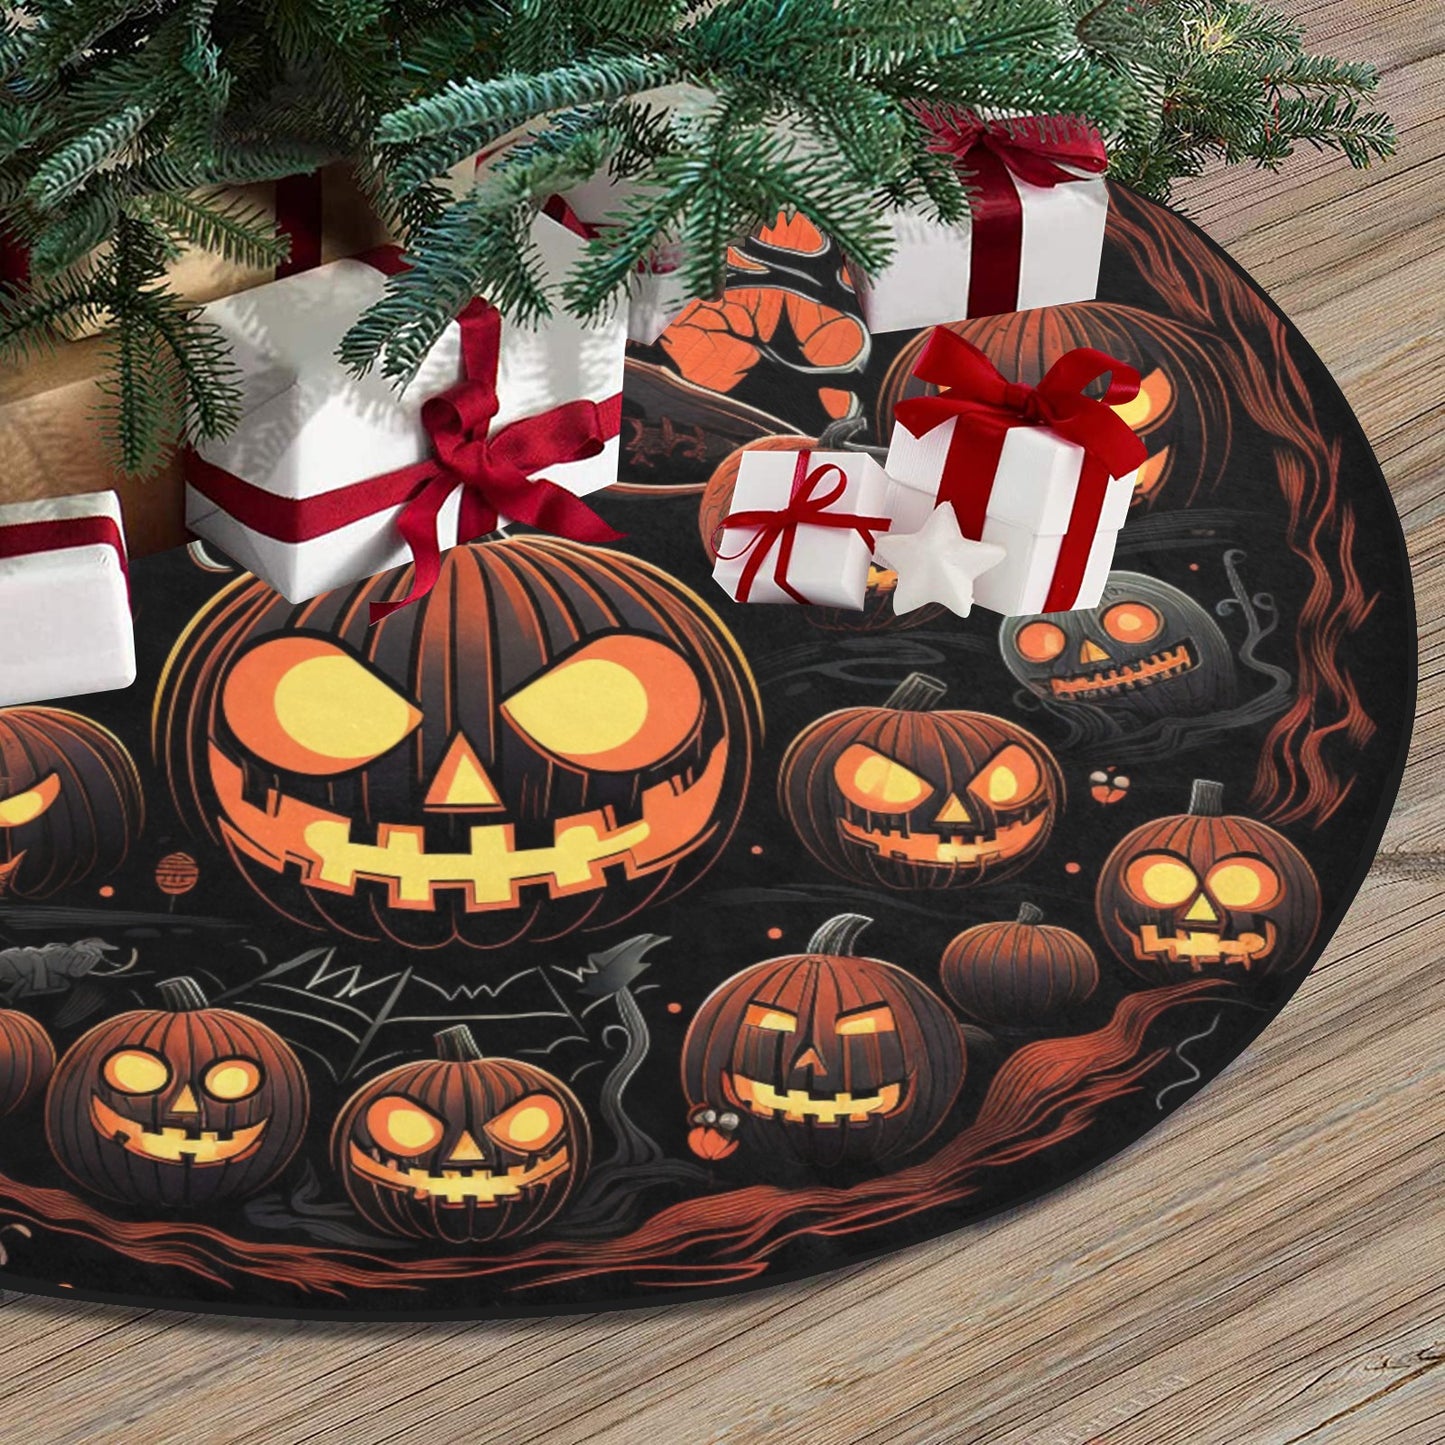 Orange Black Halloween Tree Skirt, Jack O Lantern Pumpkin Christmas Stand Base Cover Decor Decoration All Hallows Eve Creepy Spooky Party